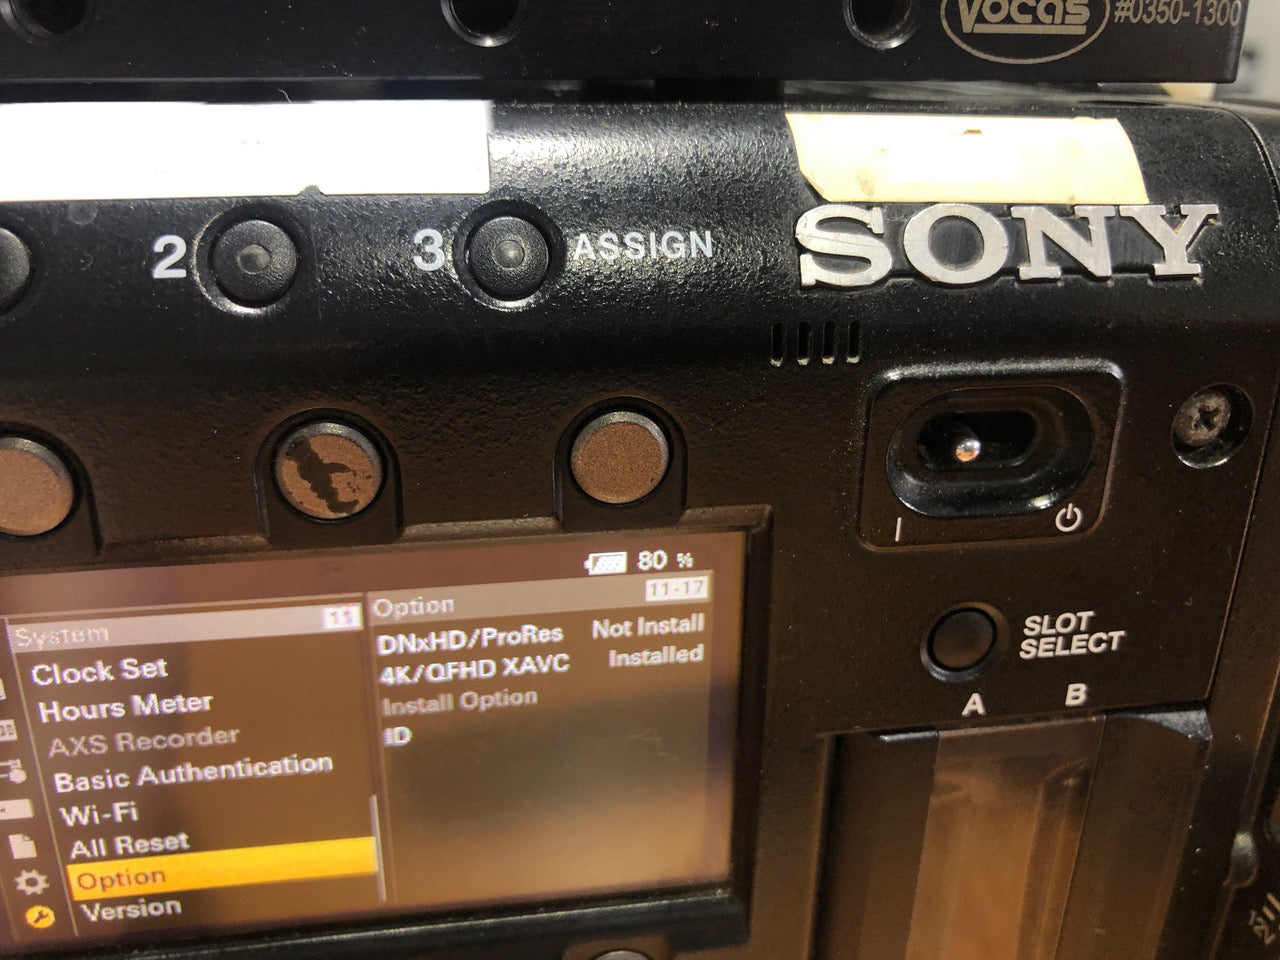 Sony PMW-F5 used with 4K